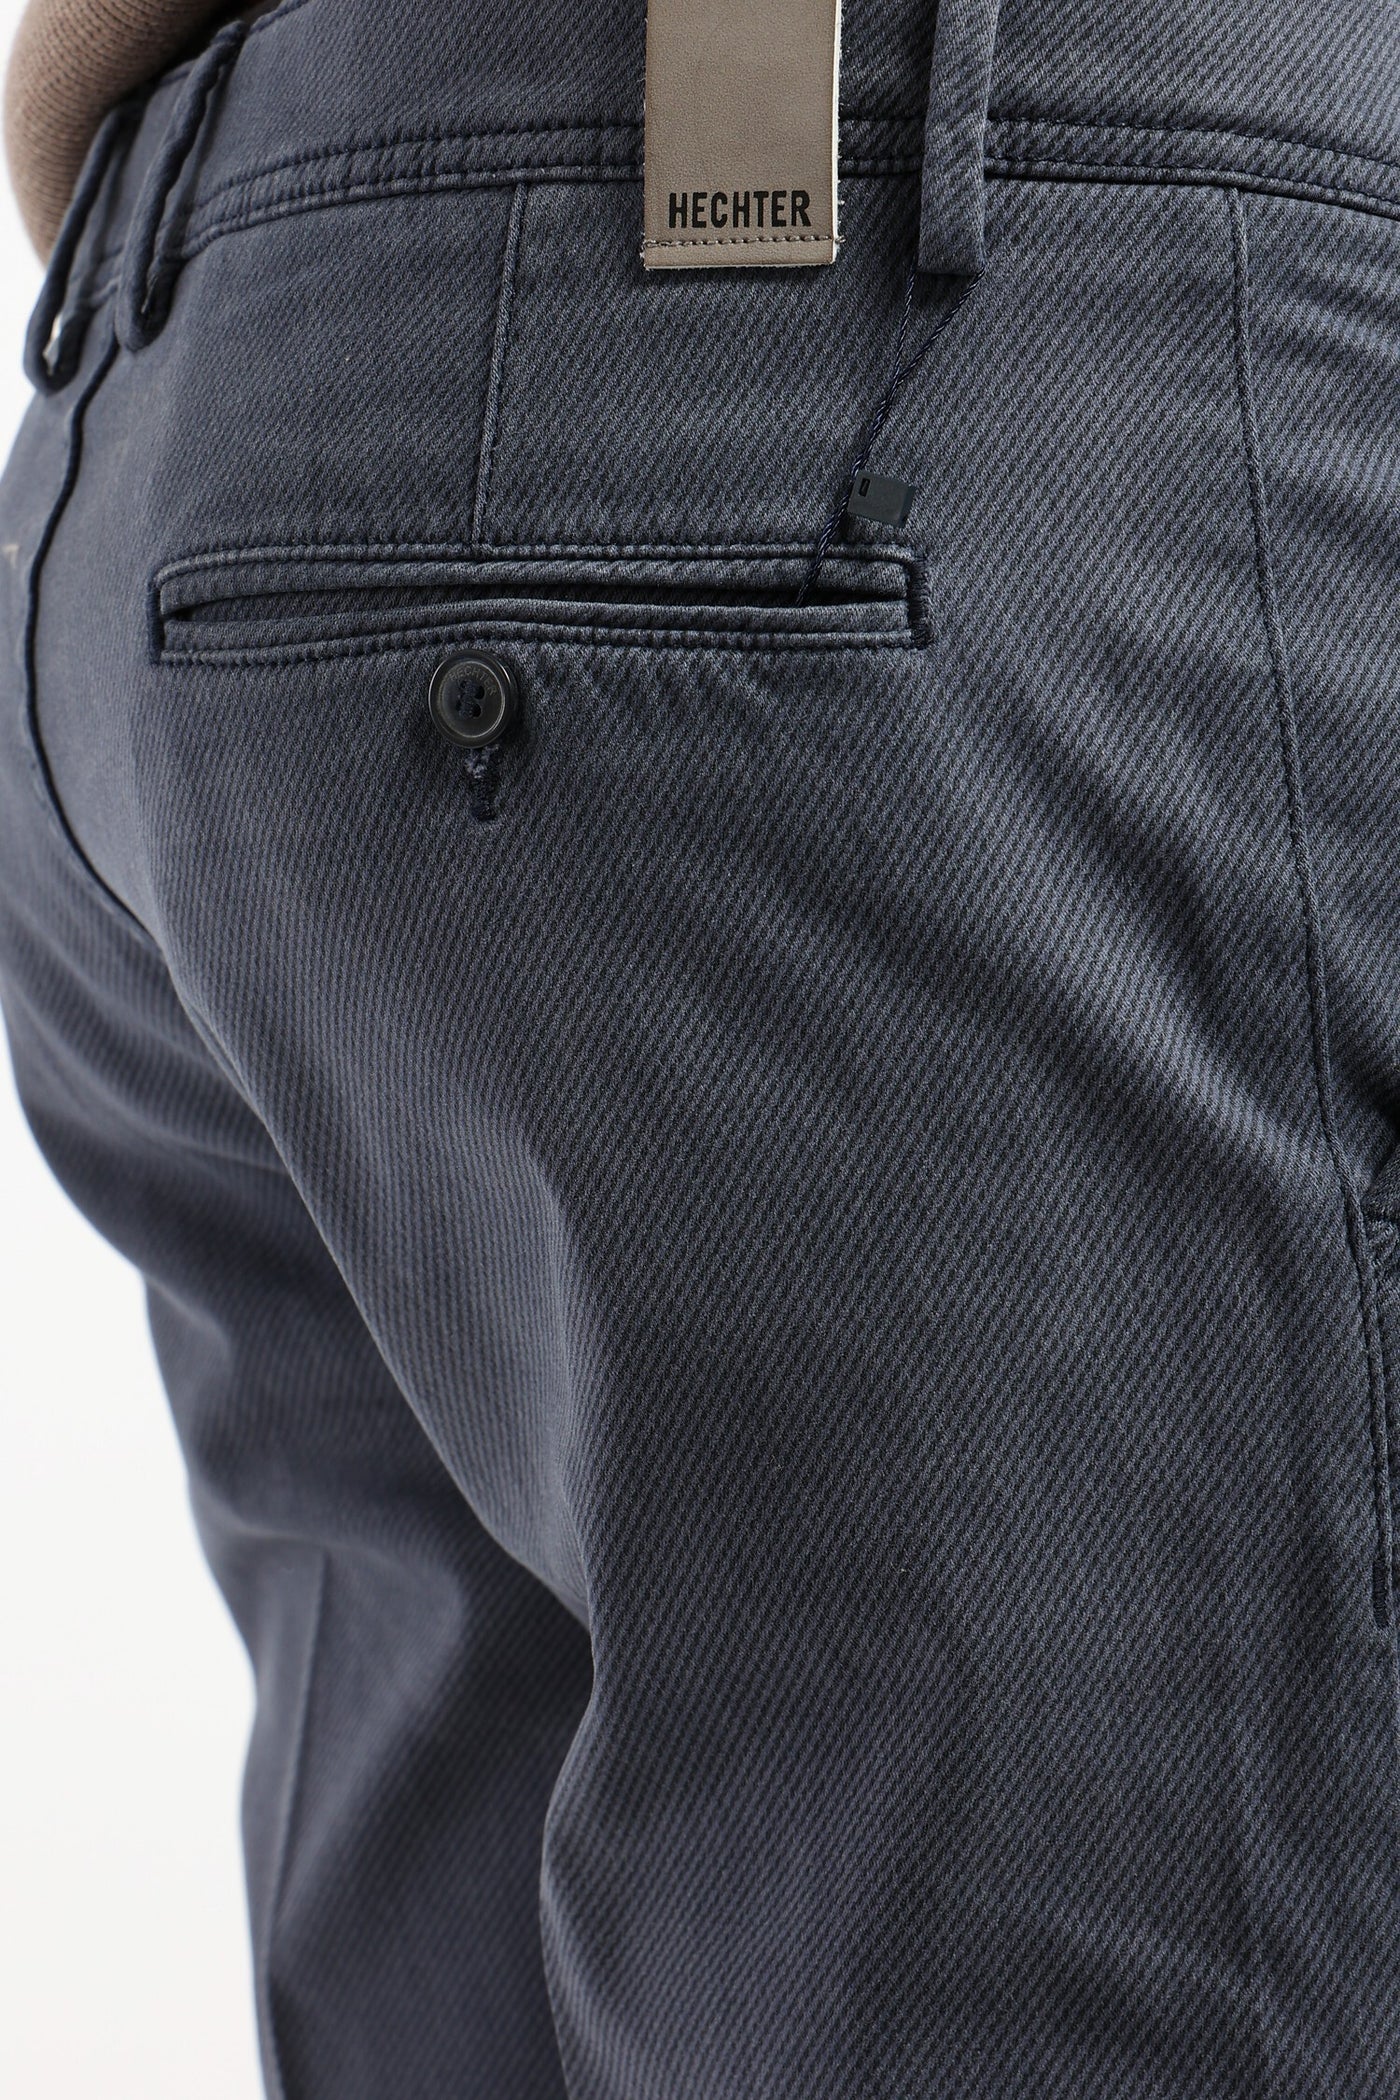 Pants - Flat Pocket